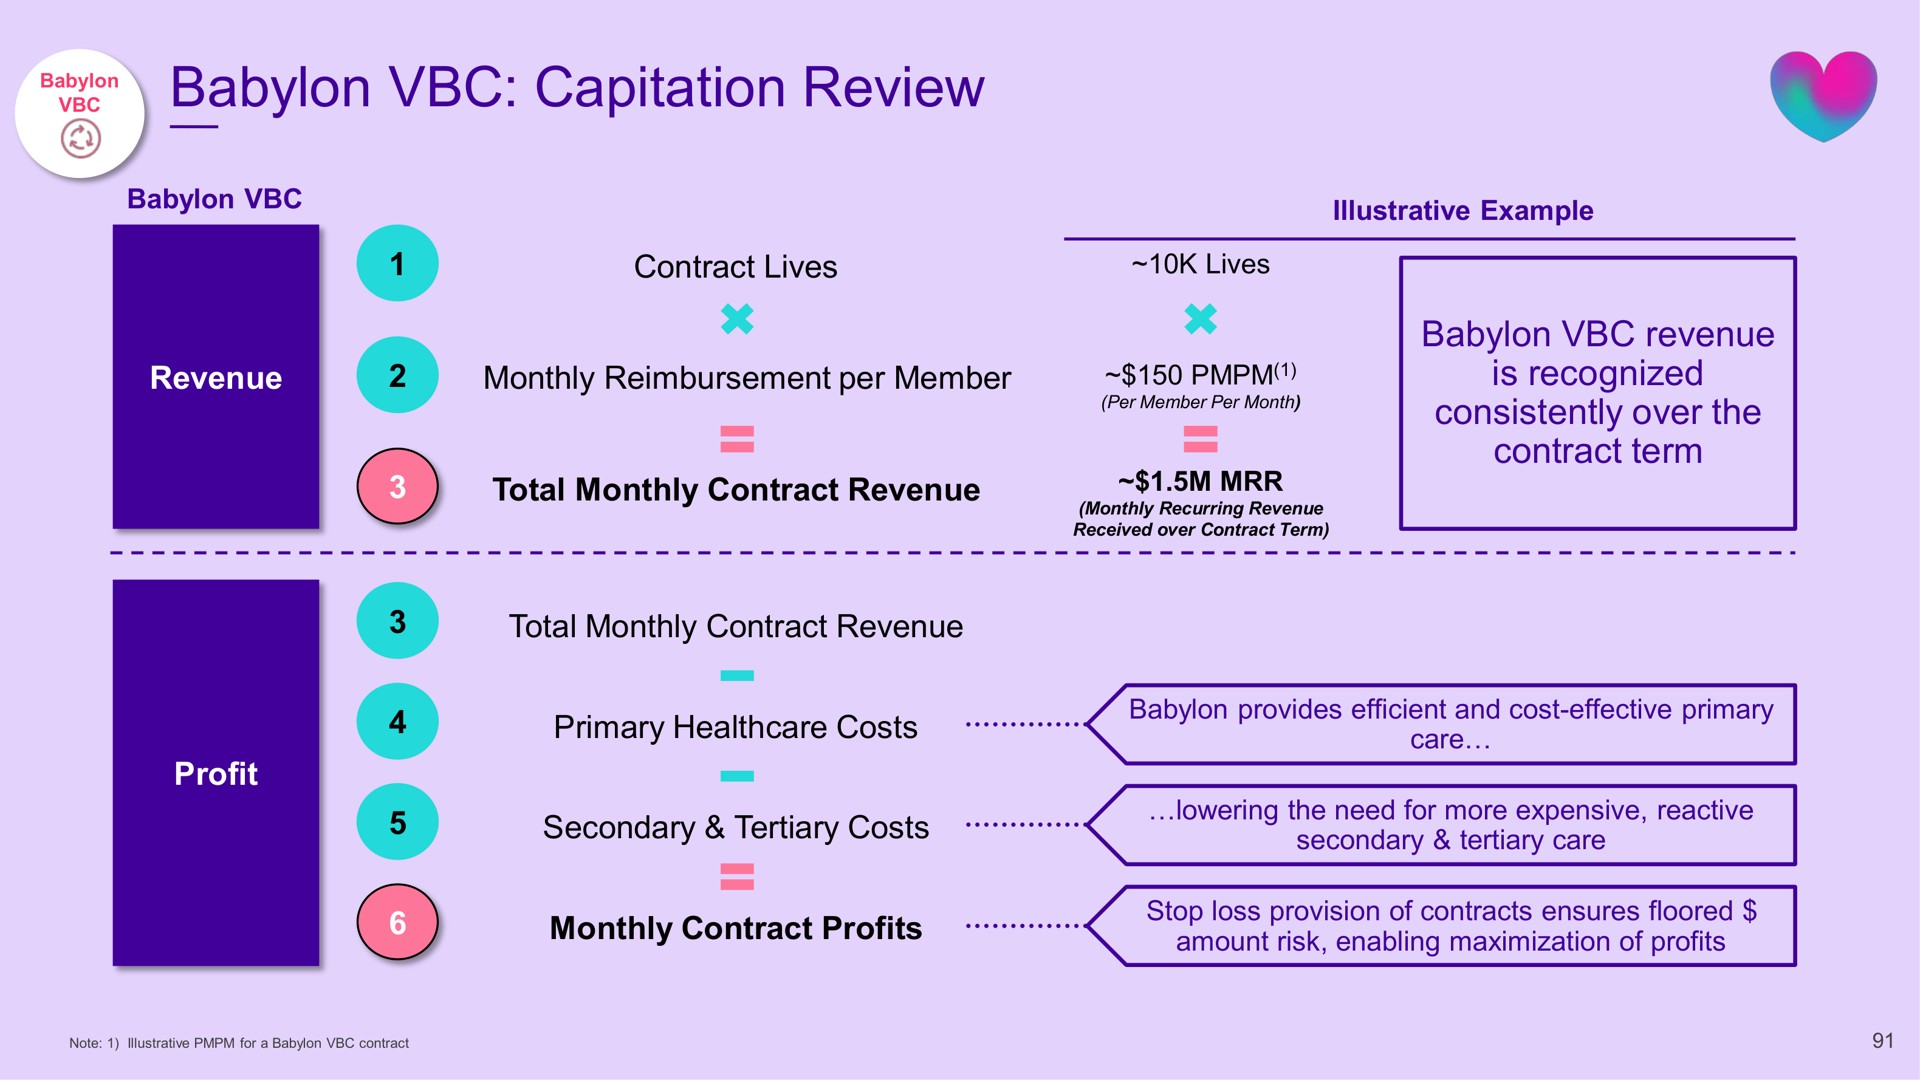 capitation review | Babylon